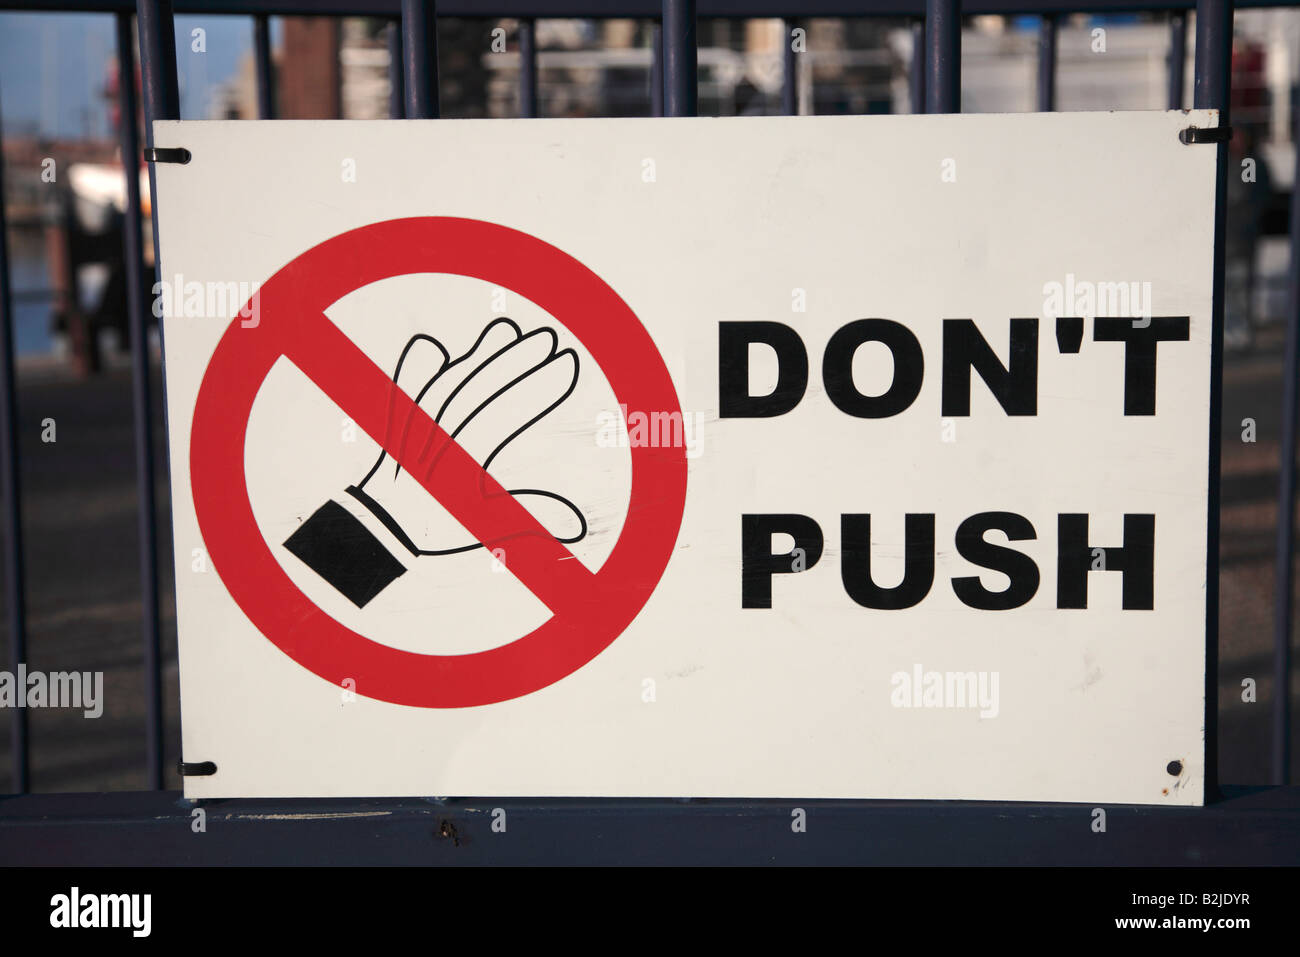 Don't push warning sign Stock Photo